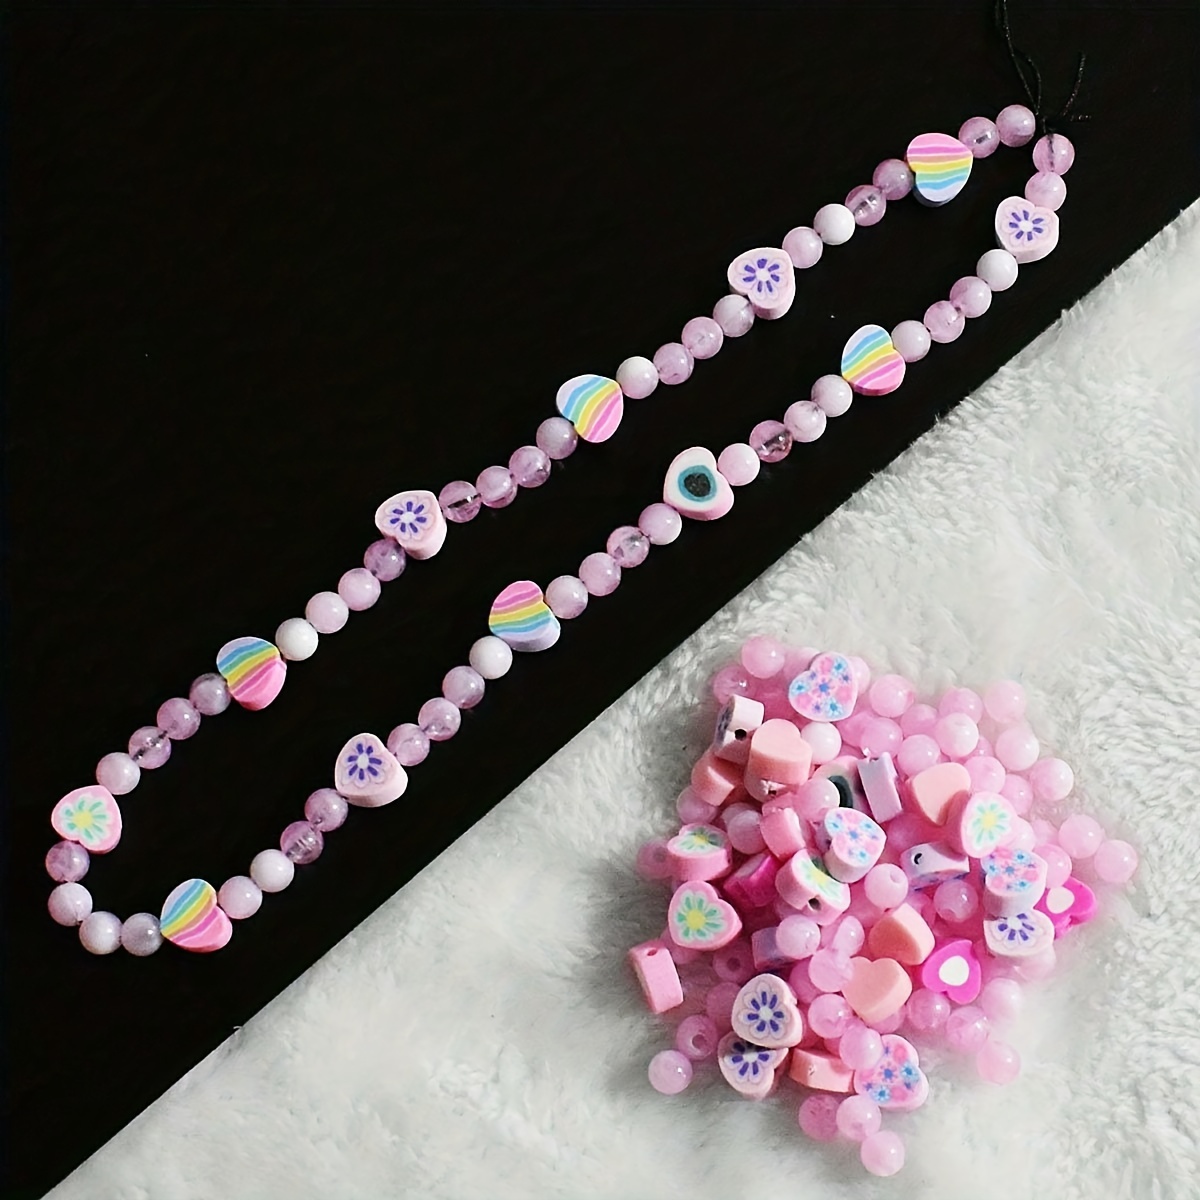 Purple clay bead necklace  Clay bead necklace, Clay bracelet, Diy jewelry  unique